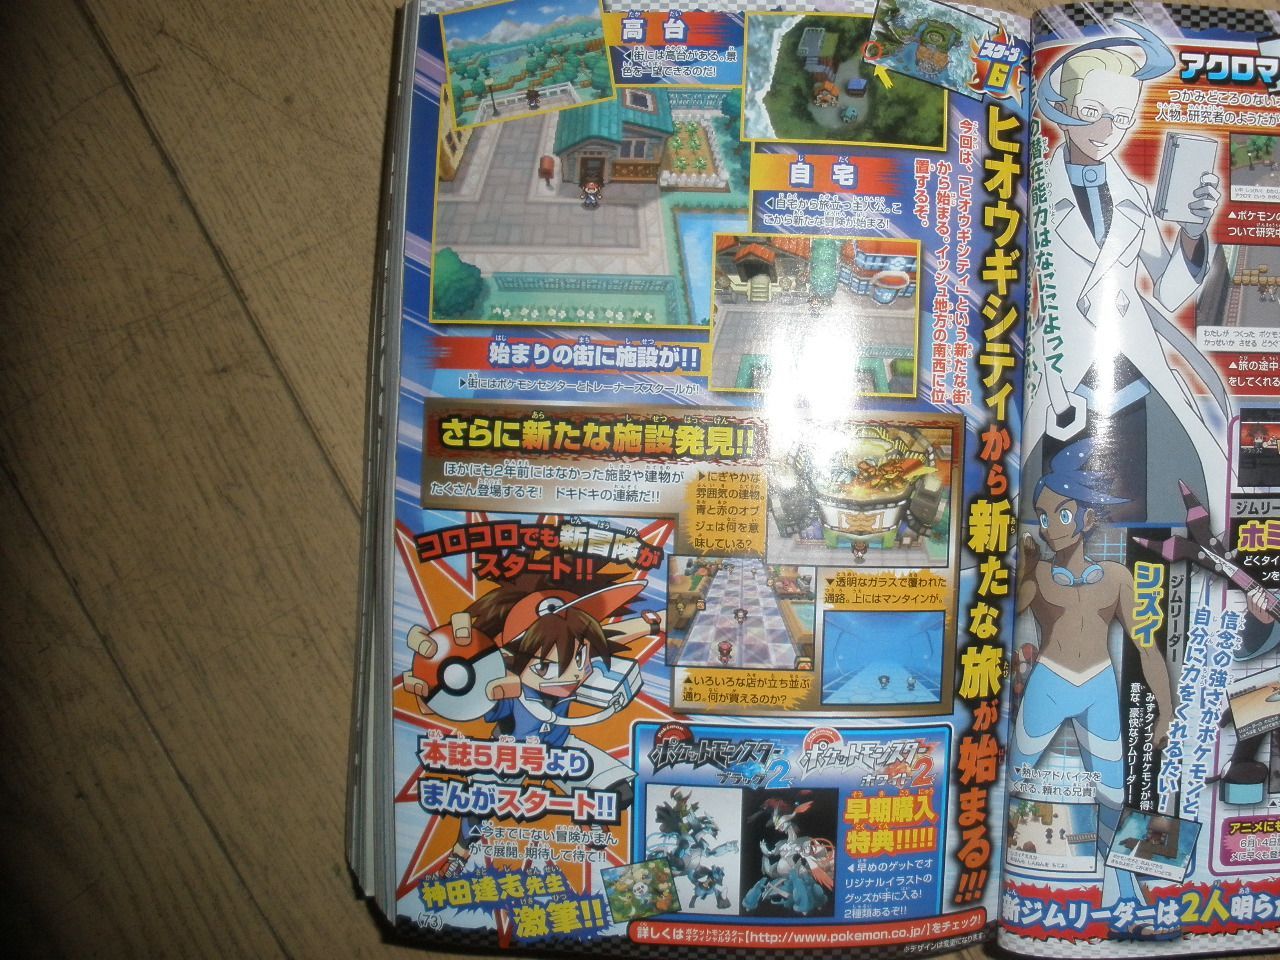 Scans da CoroCoro: Novidades de Pokémon Black 2 & White 2! - Página 2 Tumblr_m2cnodHr901qzb7eco3_1280